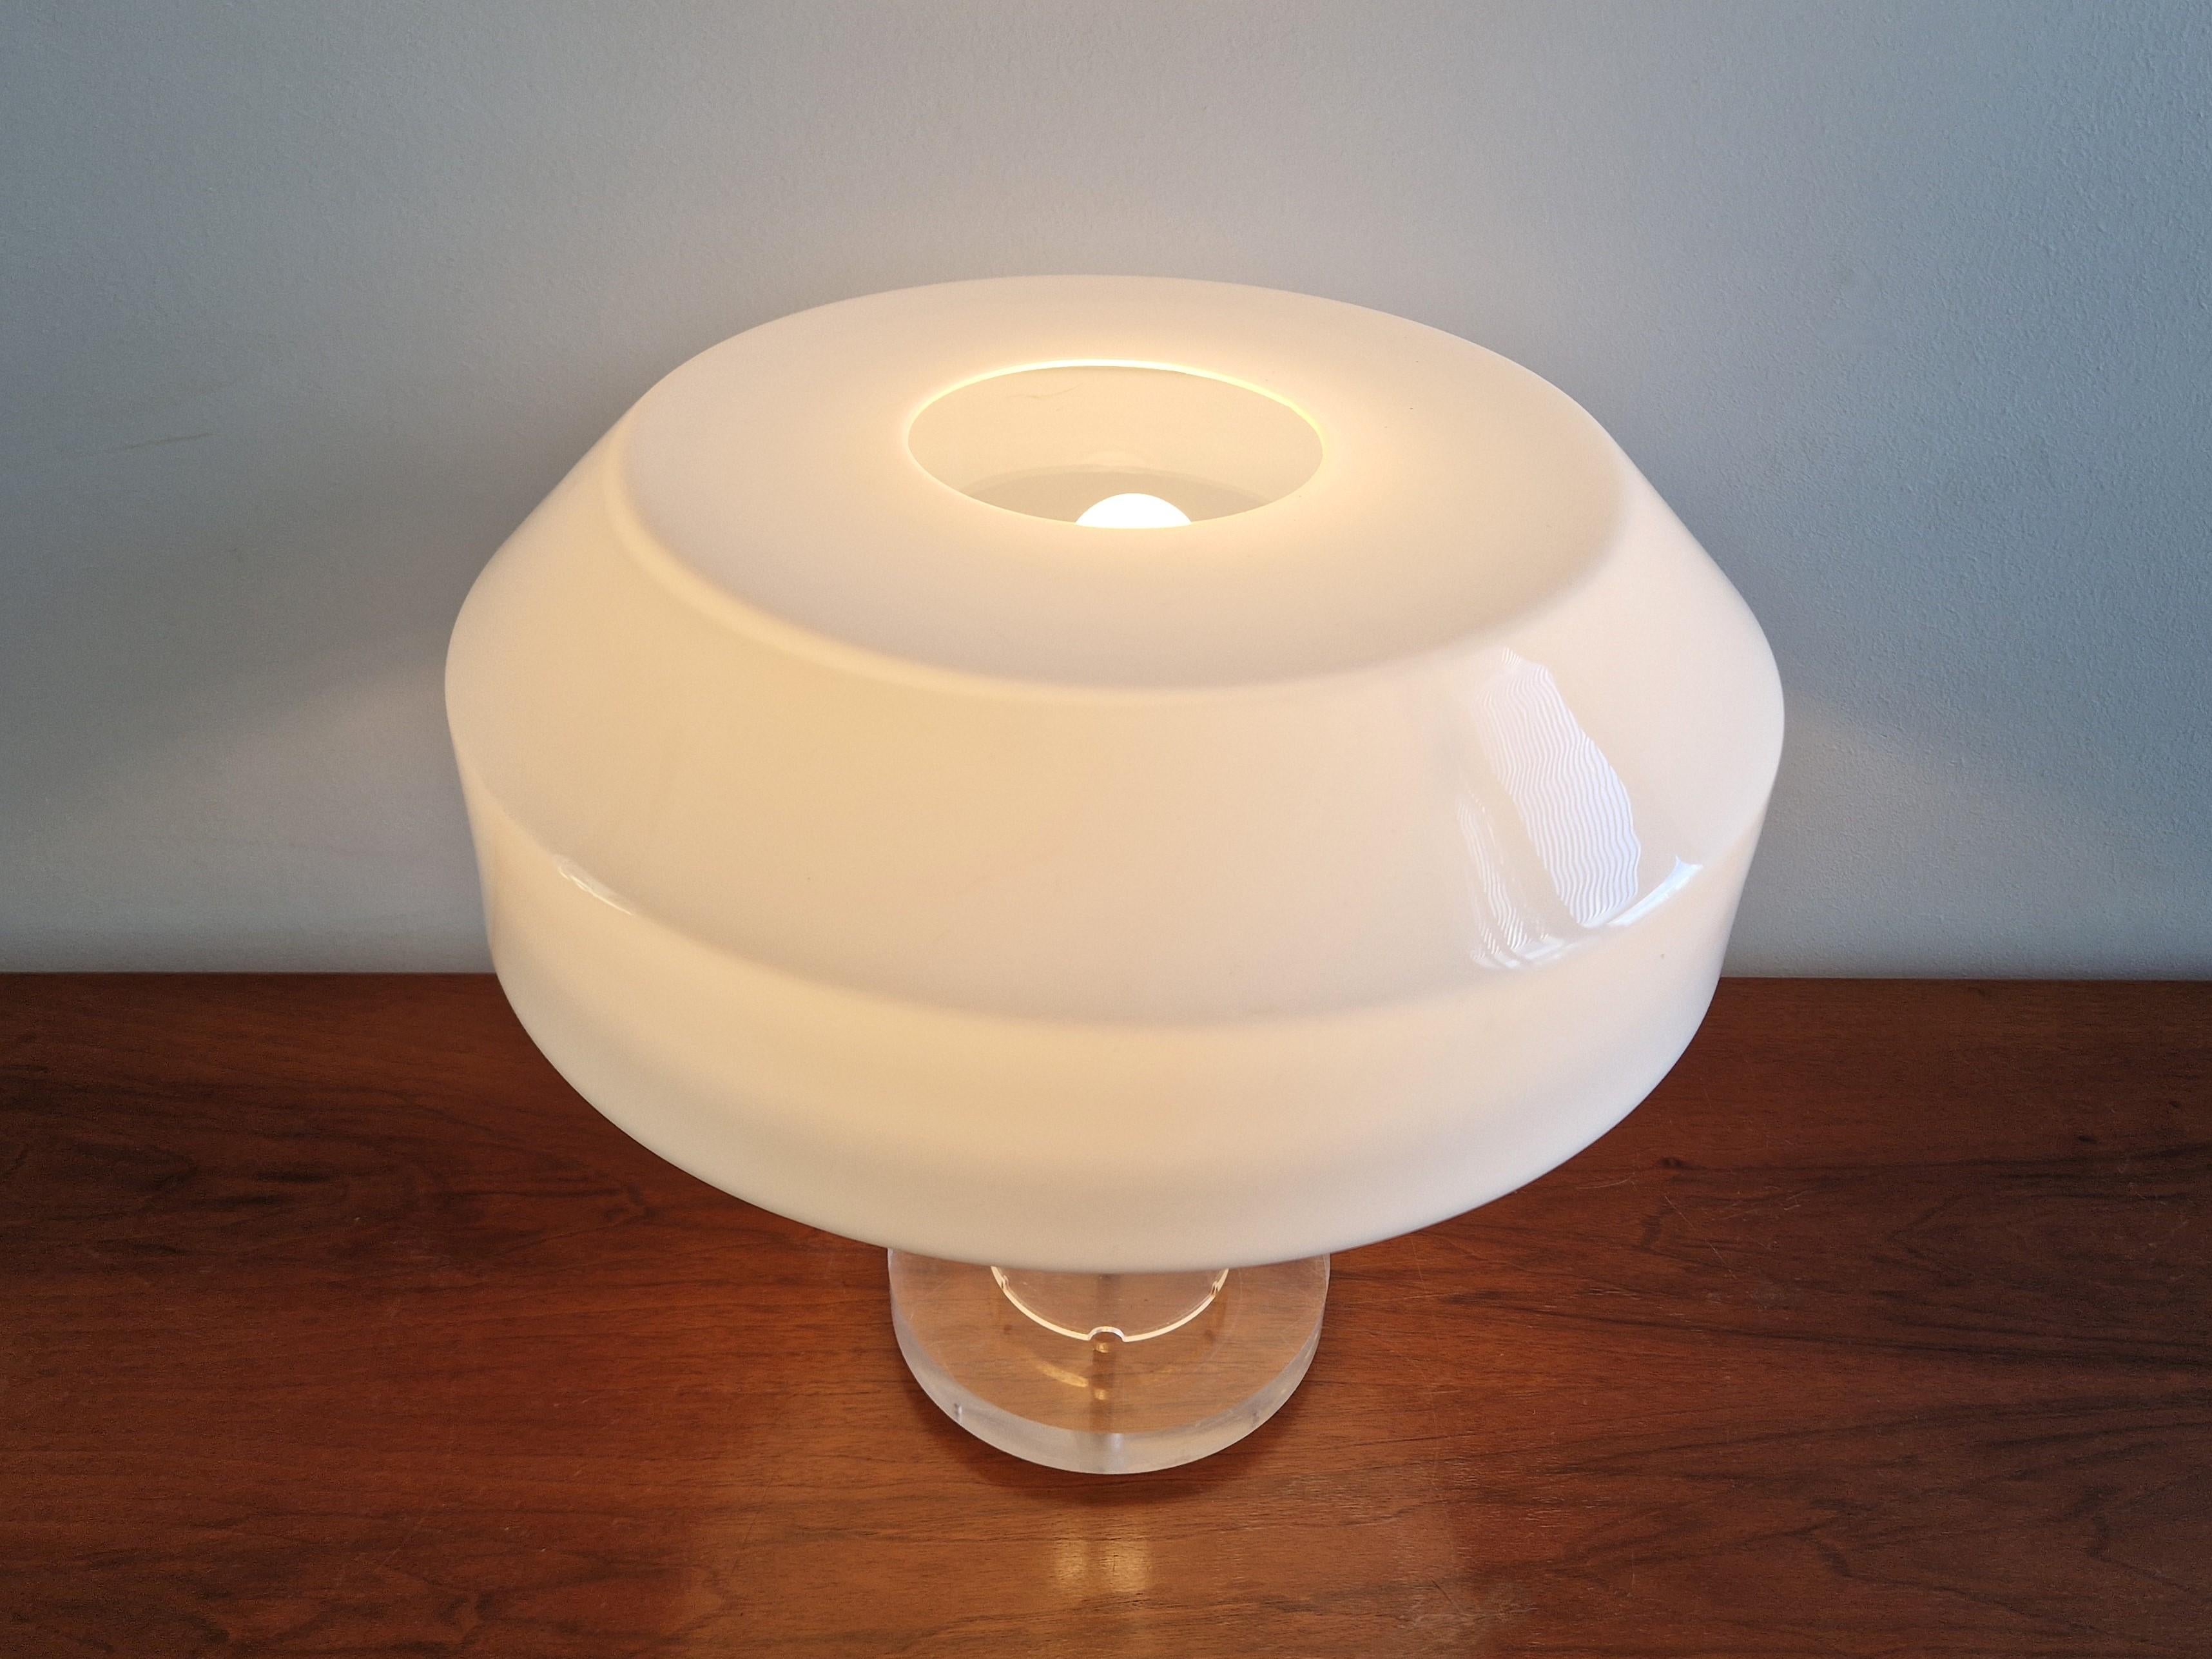 Acrylic ABN table lamp by Aldo van den Nieuwelaar for ABN, The Netherlands 1970's For Sale